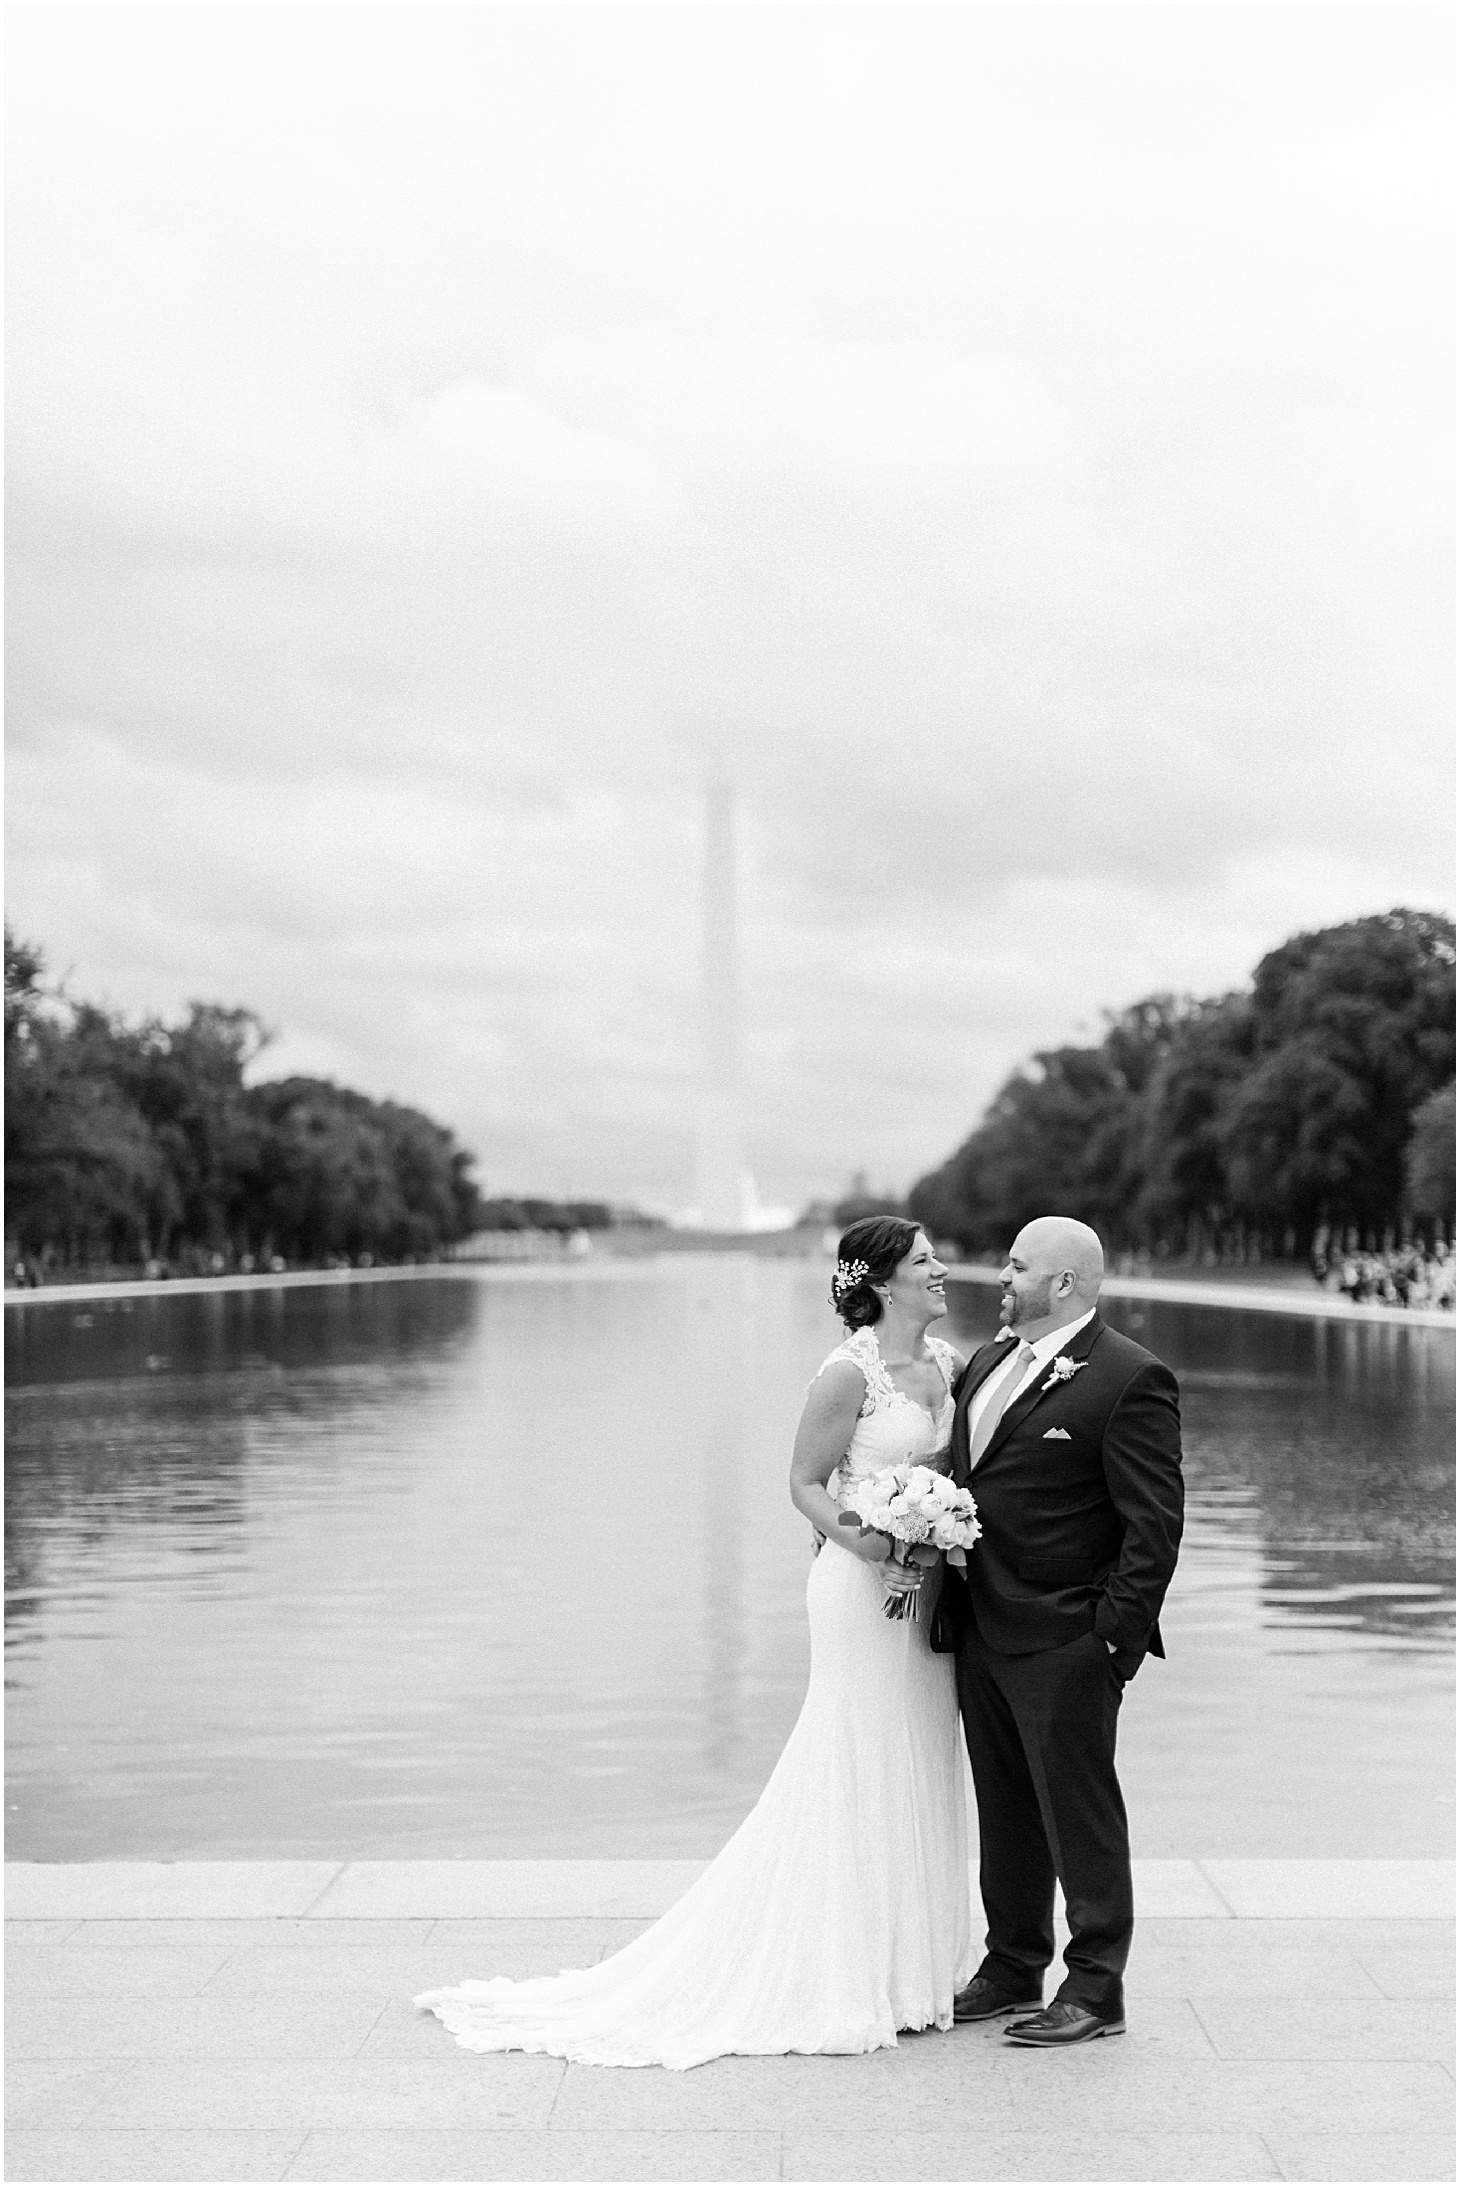 National Mall Wedding Portrait | Top Washington DC wedding photographer Sarah Bradshaw